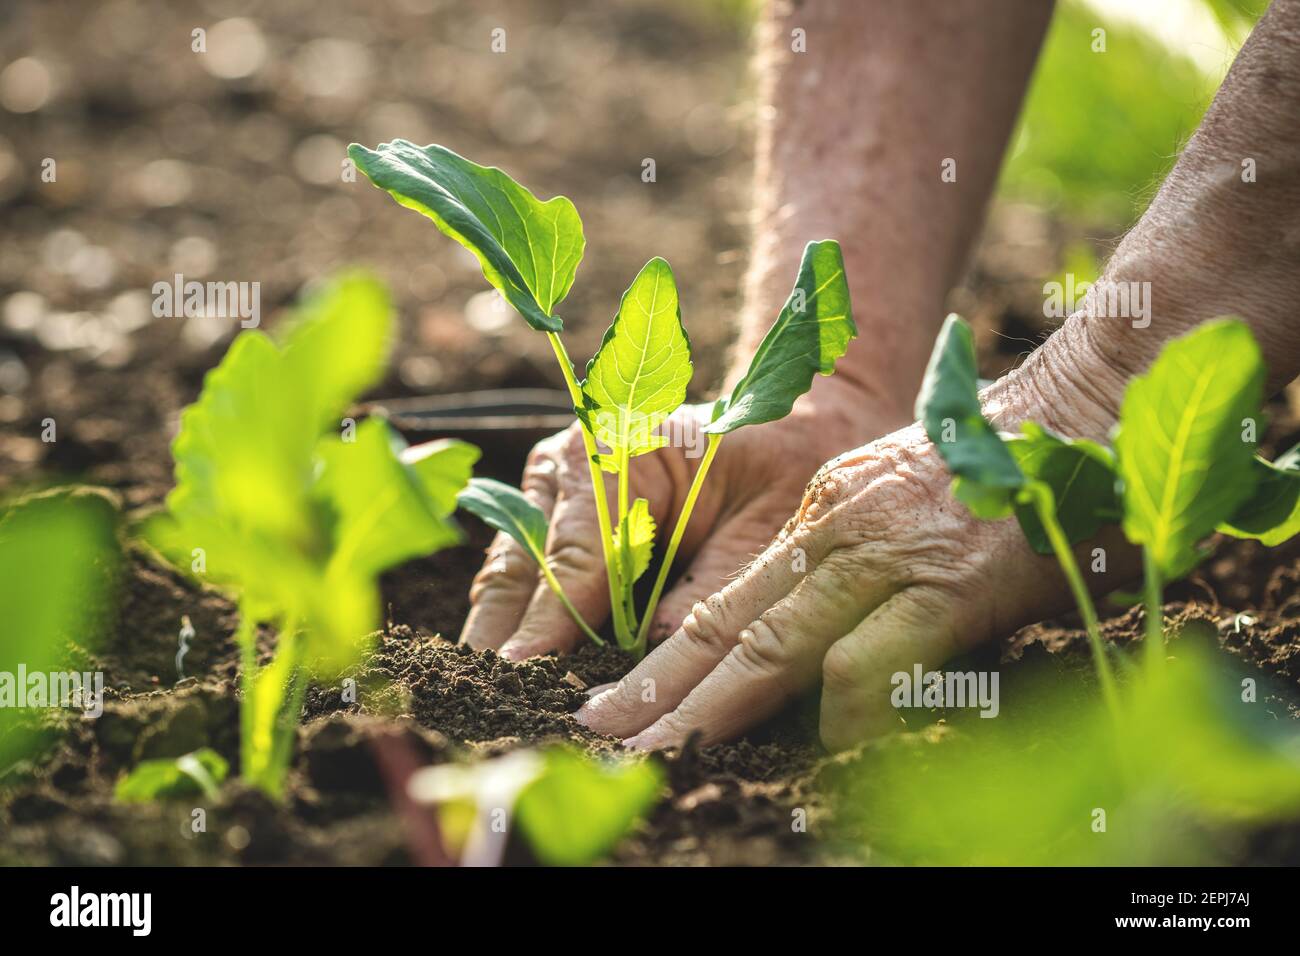 Farmer hands planting kohlrabi seedling in organic garden. Gardening at spring season. Green kohlrabi plant in soil. Close-up selective focus Stock Photo